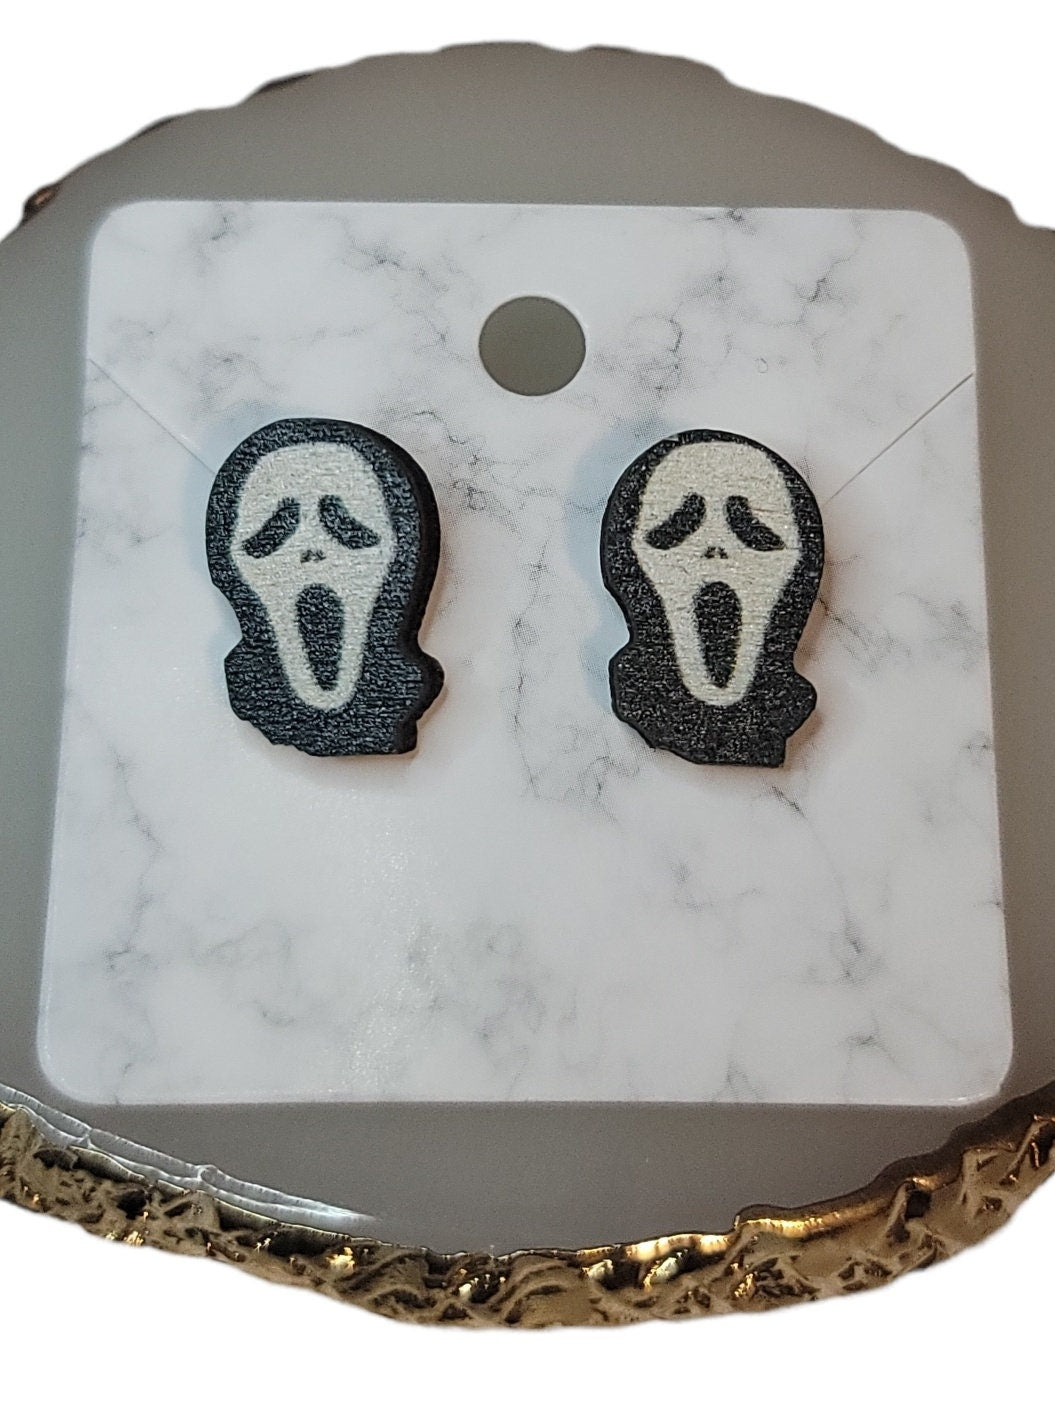 Scream ghost face wood post stud earrings steel pin